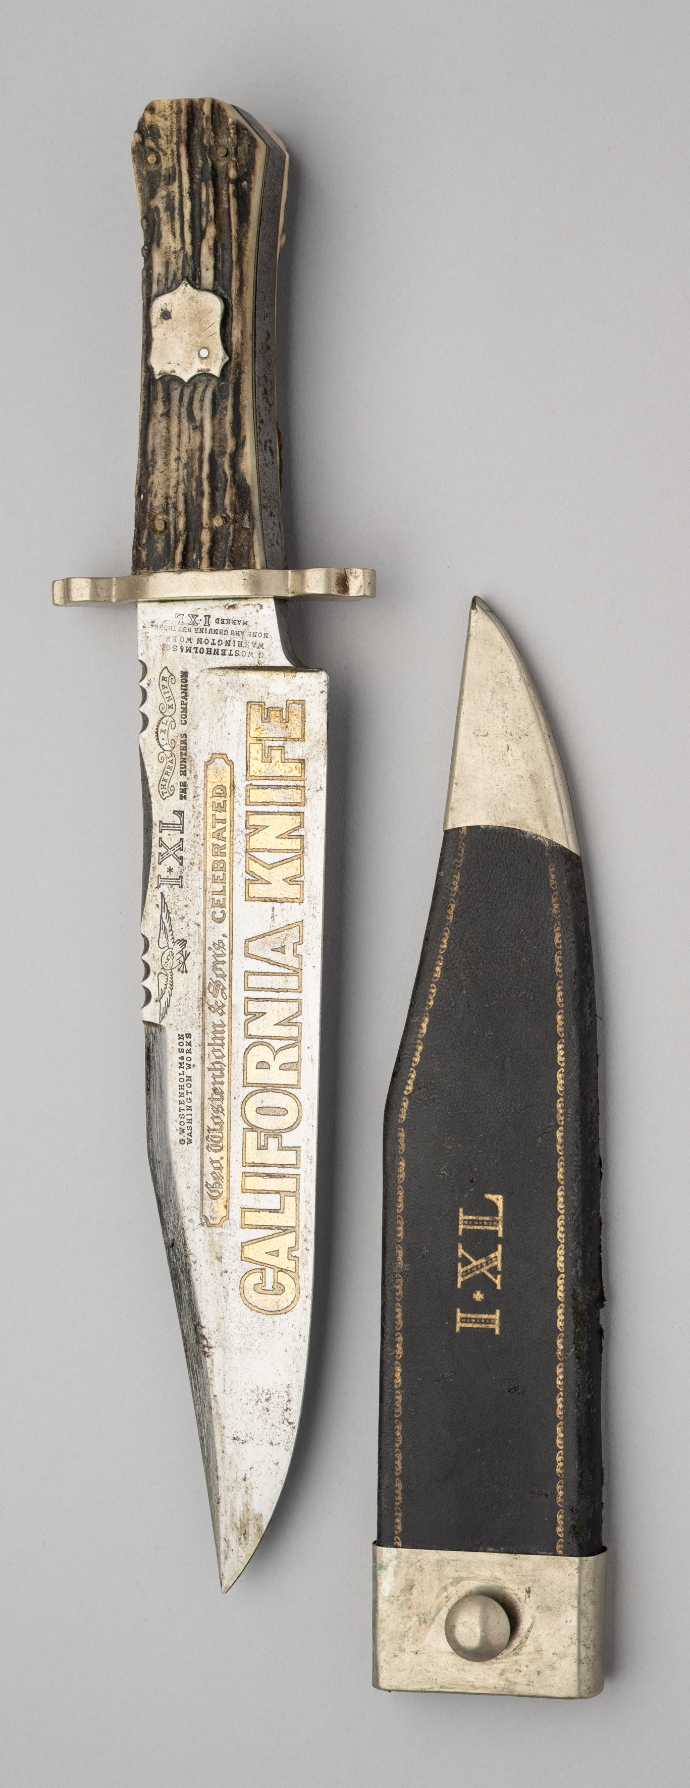 A BOWIE KNIFE, GEORGE WOSTENHOLM & SON, WASHINGTON WORKS, SHEFFIELD, CIRCA 1960